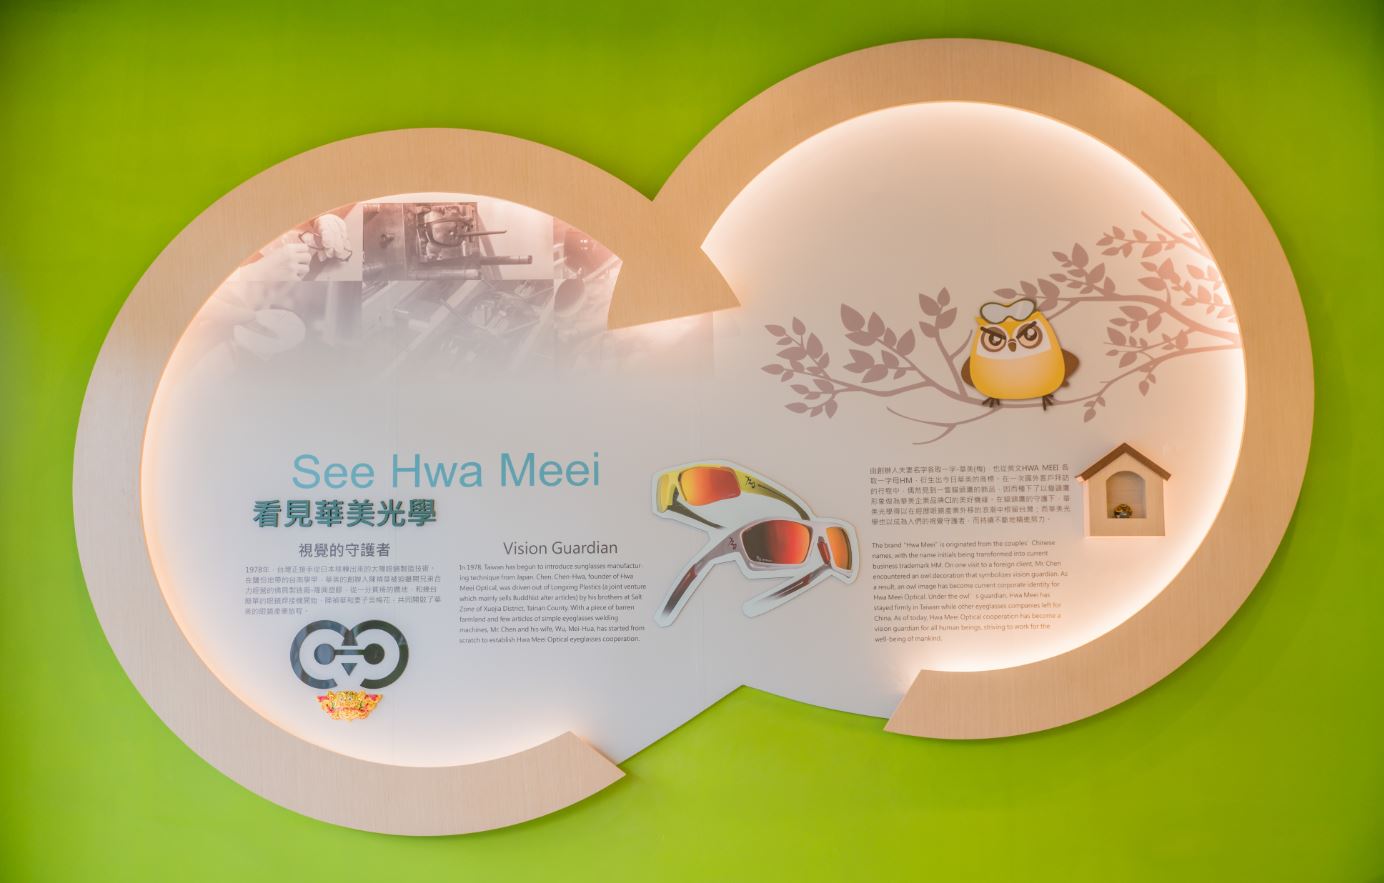 Eye Fun Vision-Hwameei Optical-See Hwa Meei